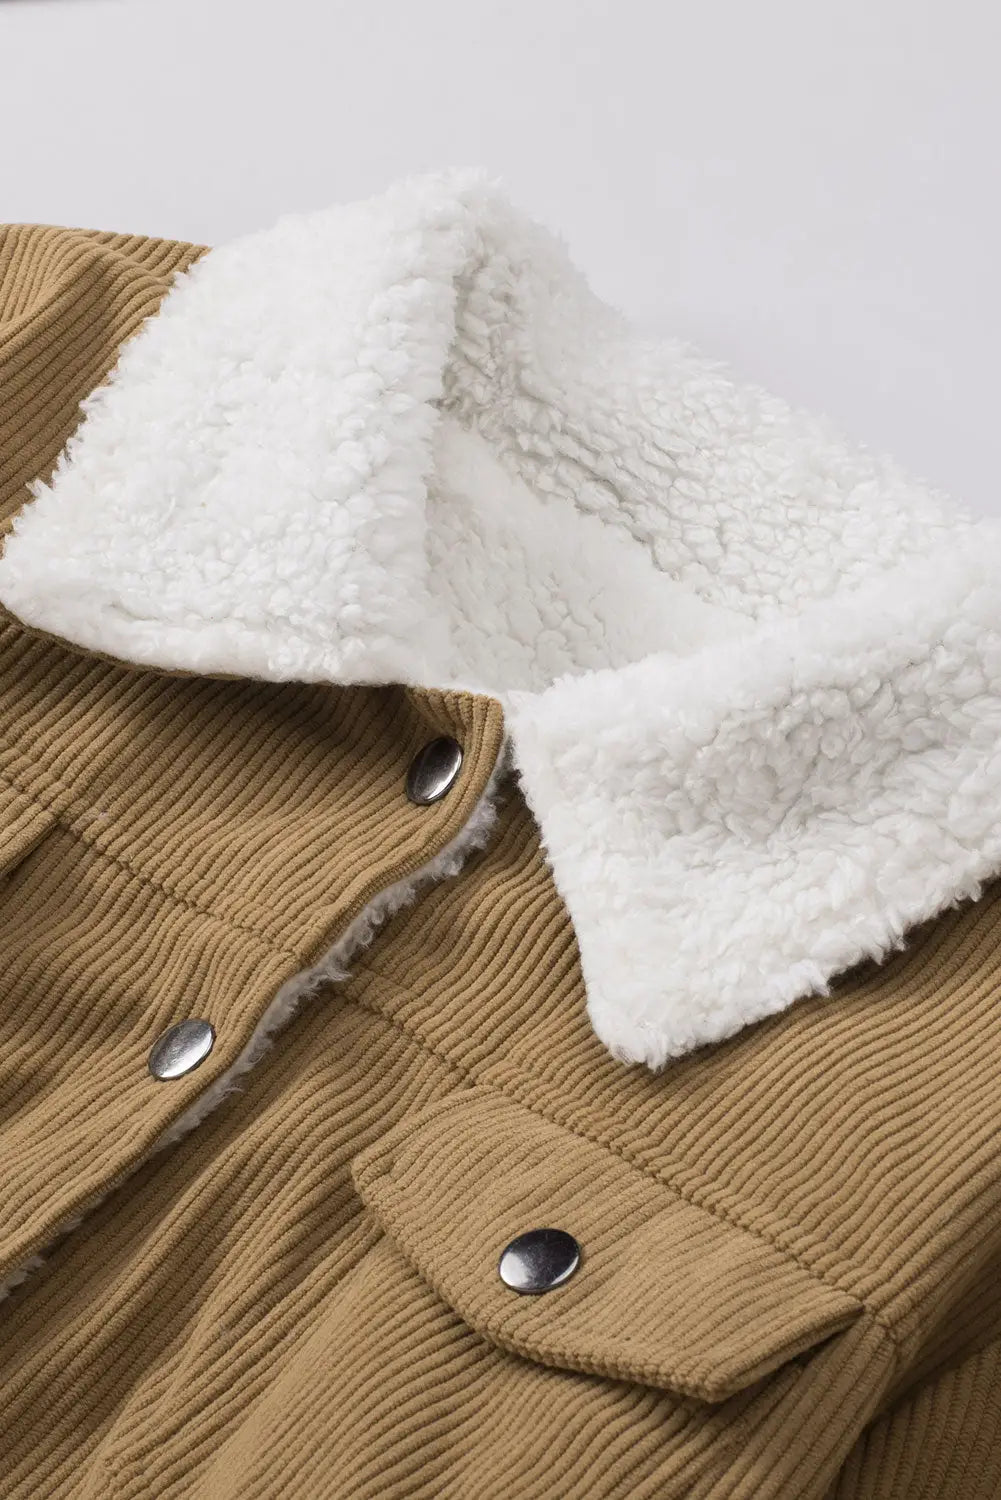 Khaki corduroy sherpa snap button flap jacket - jackets